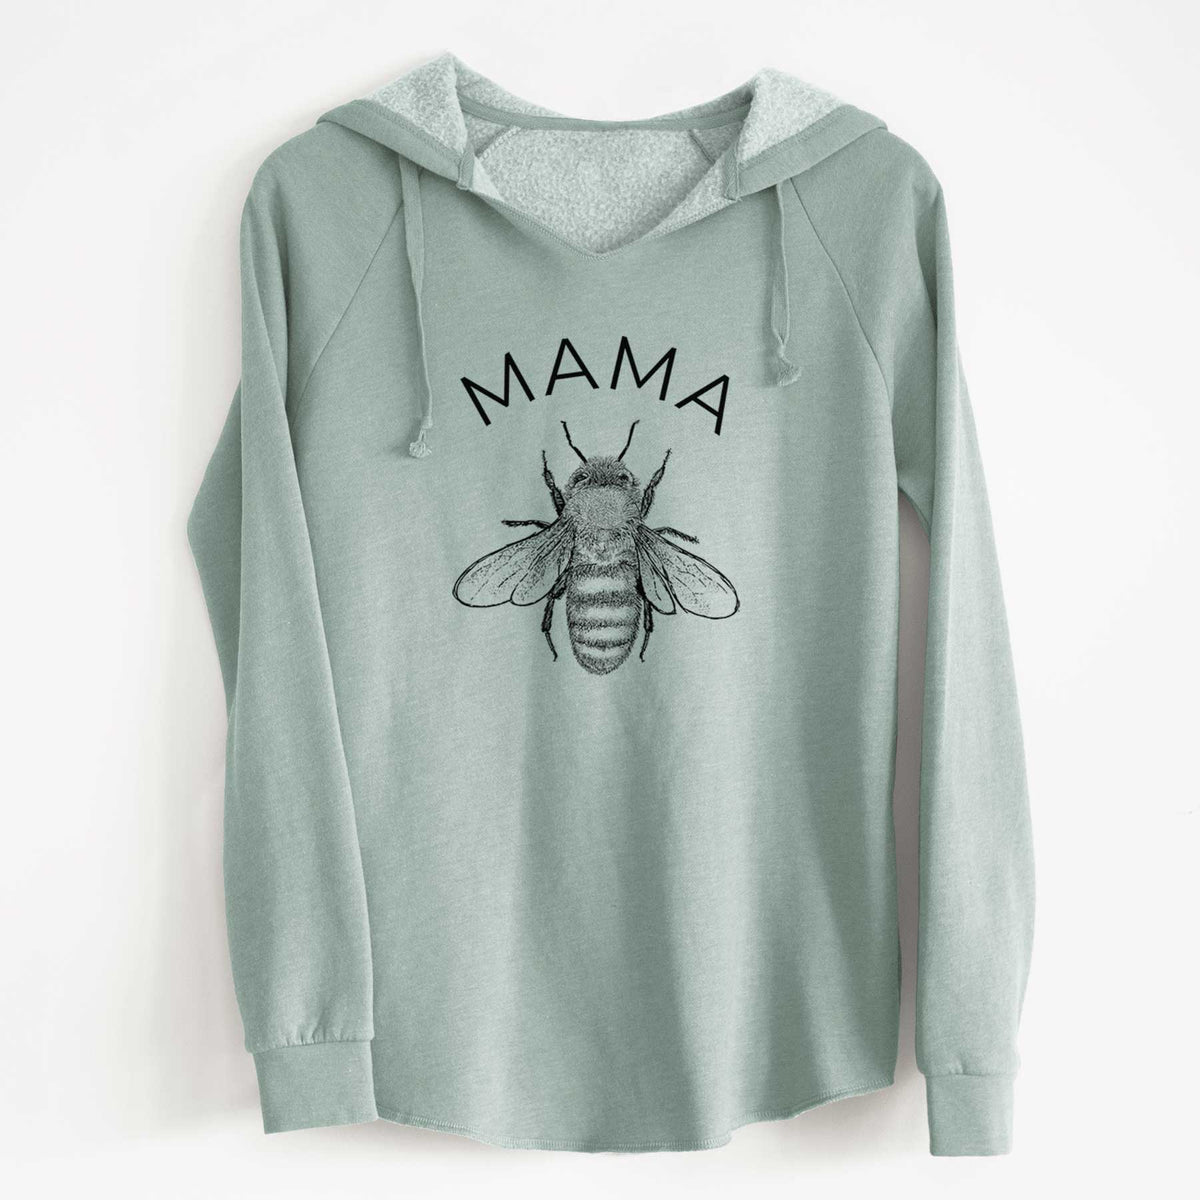 Mama Bee - Cali Wave Hooded Sweatshirt